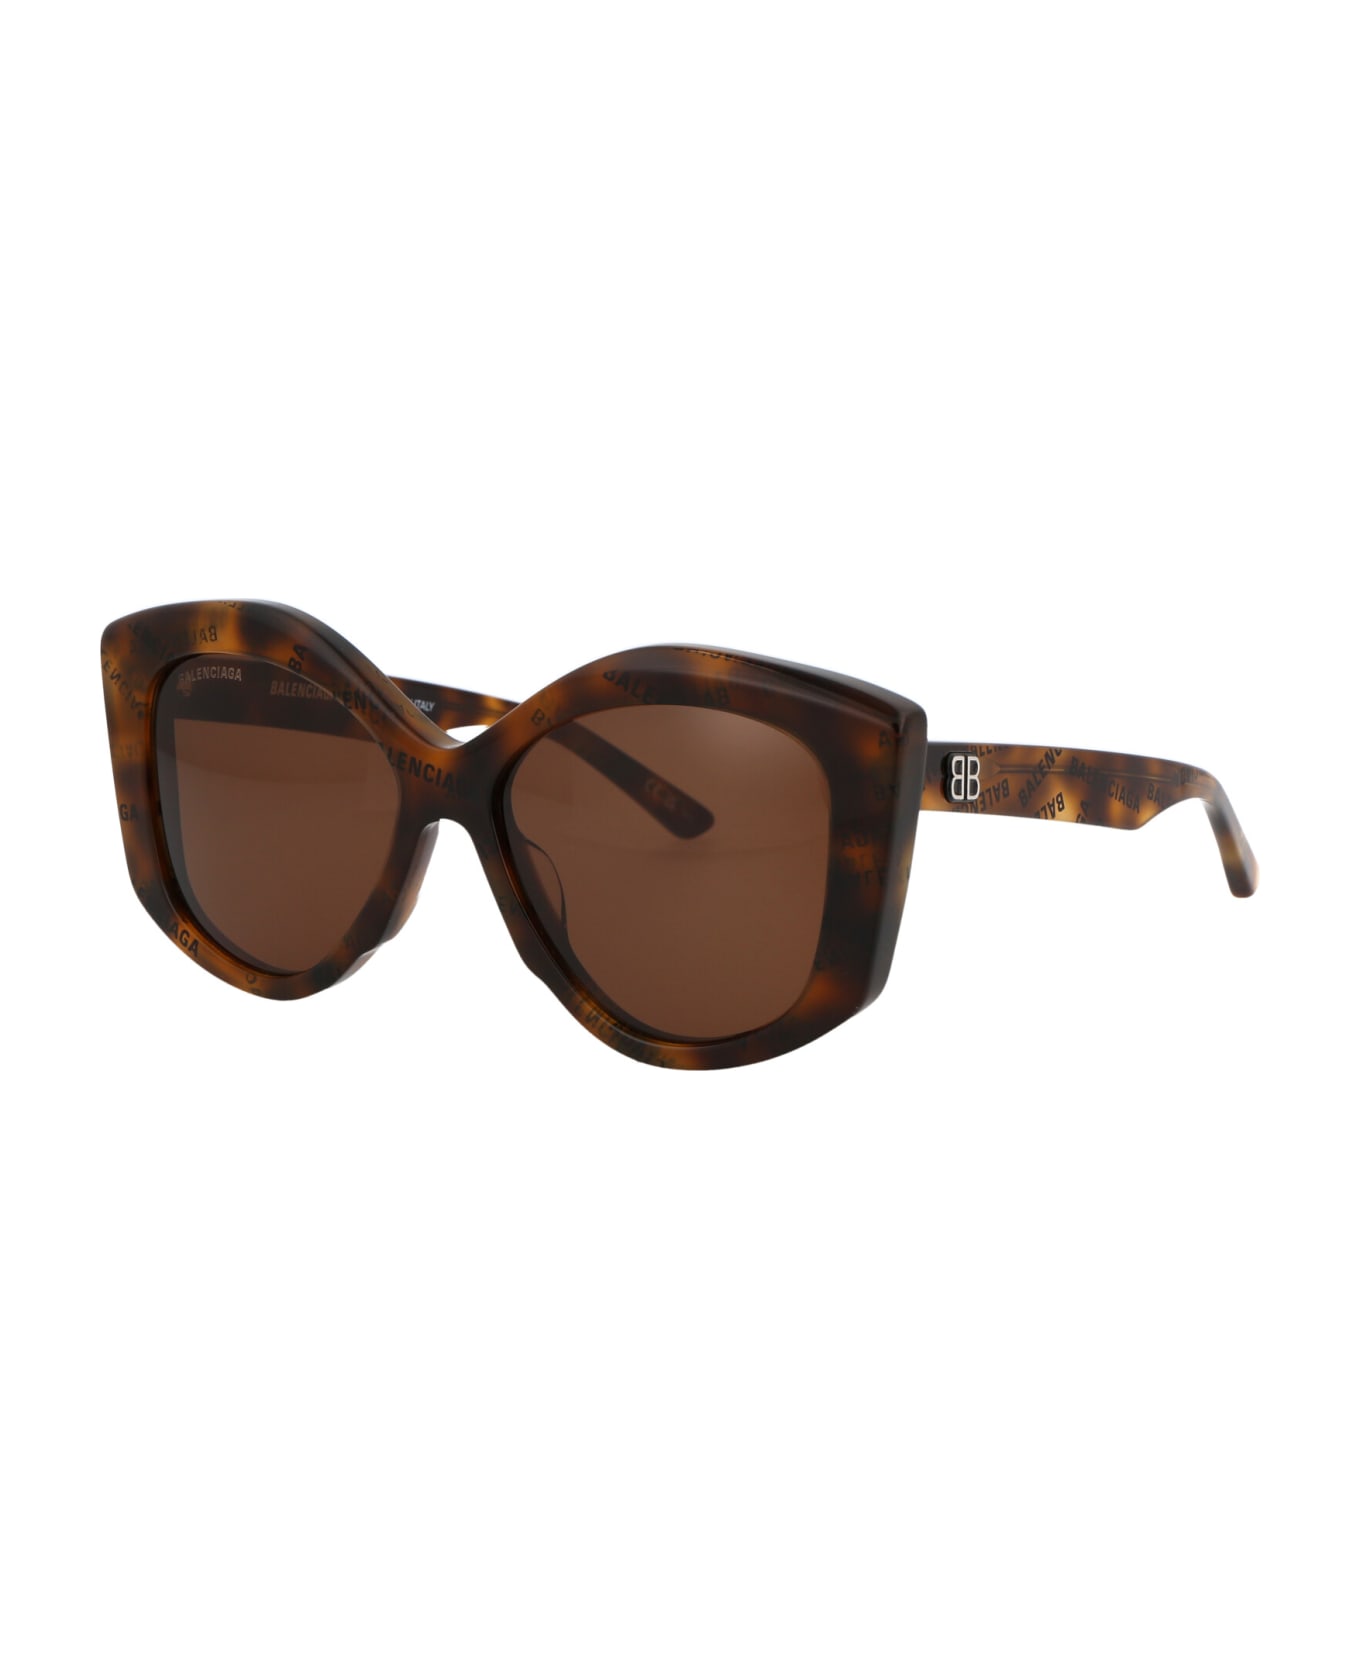 Balenciaga Eyewear Bb0126s Sunglasses - 005 Clyde Round Tortoiseshell-acetate Sunglasses Mens Beige